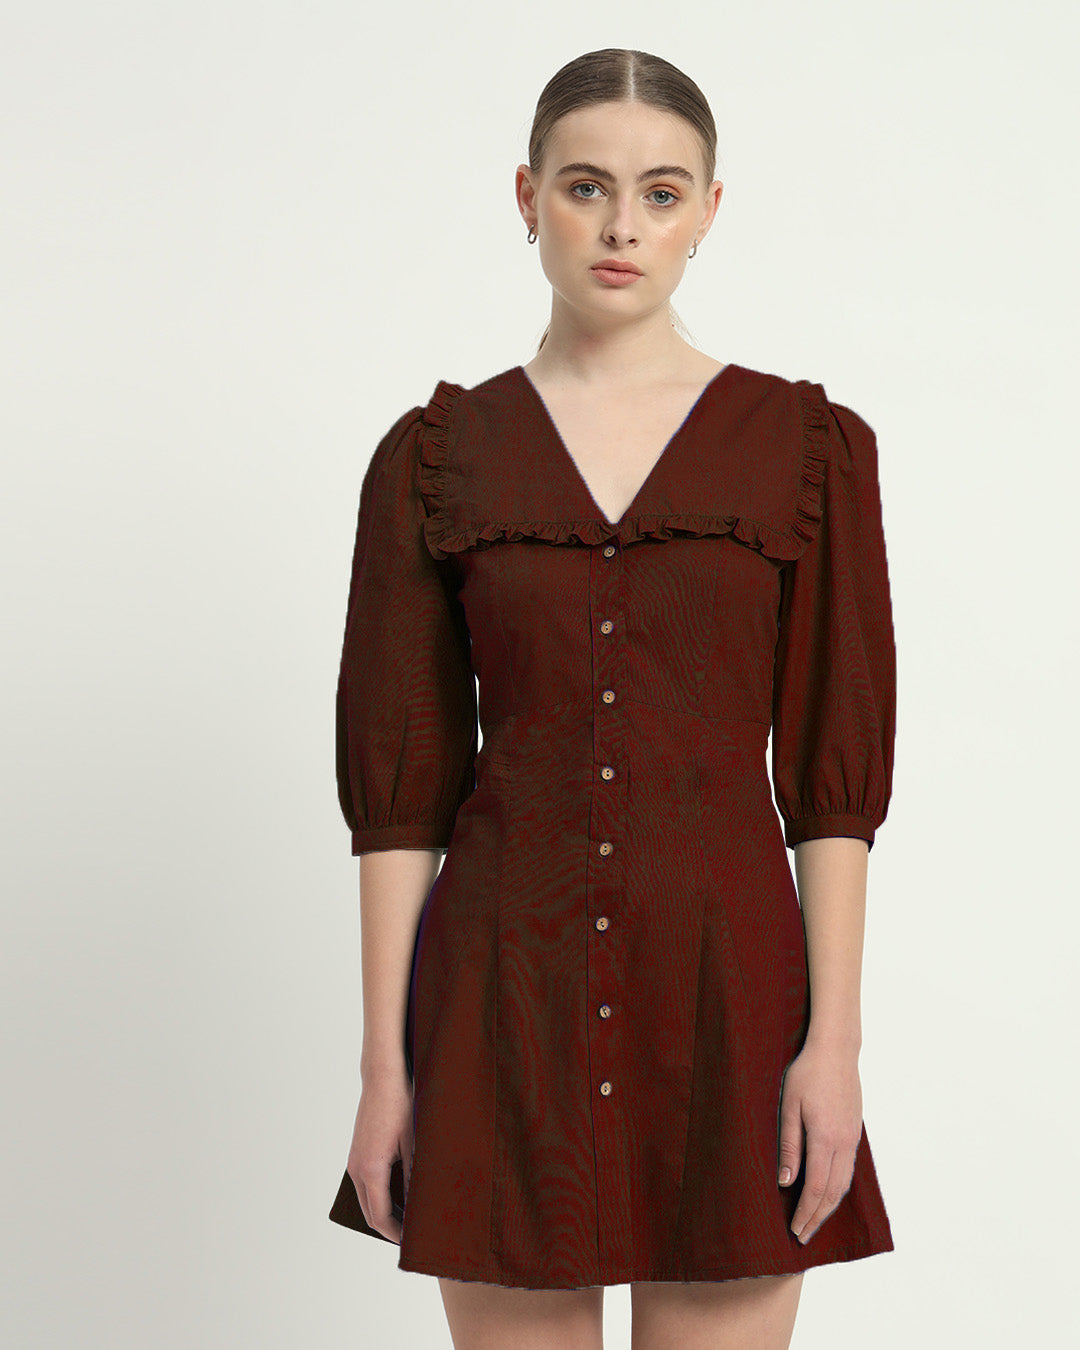 The Rouge Isabela Cotton Dress